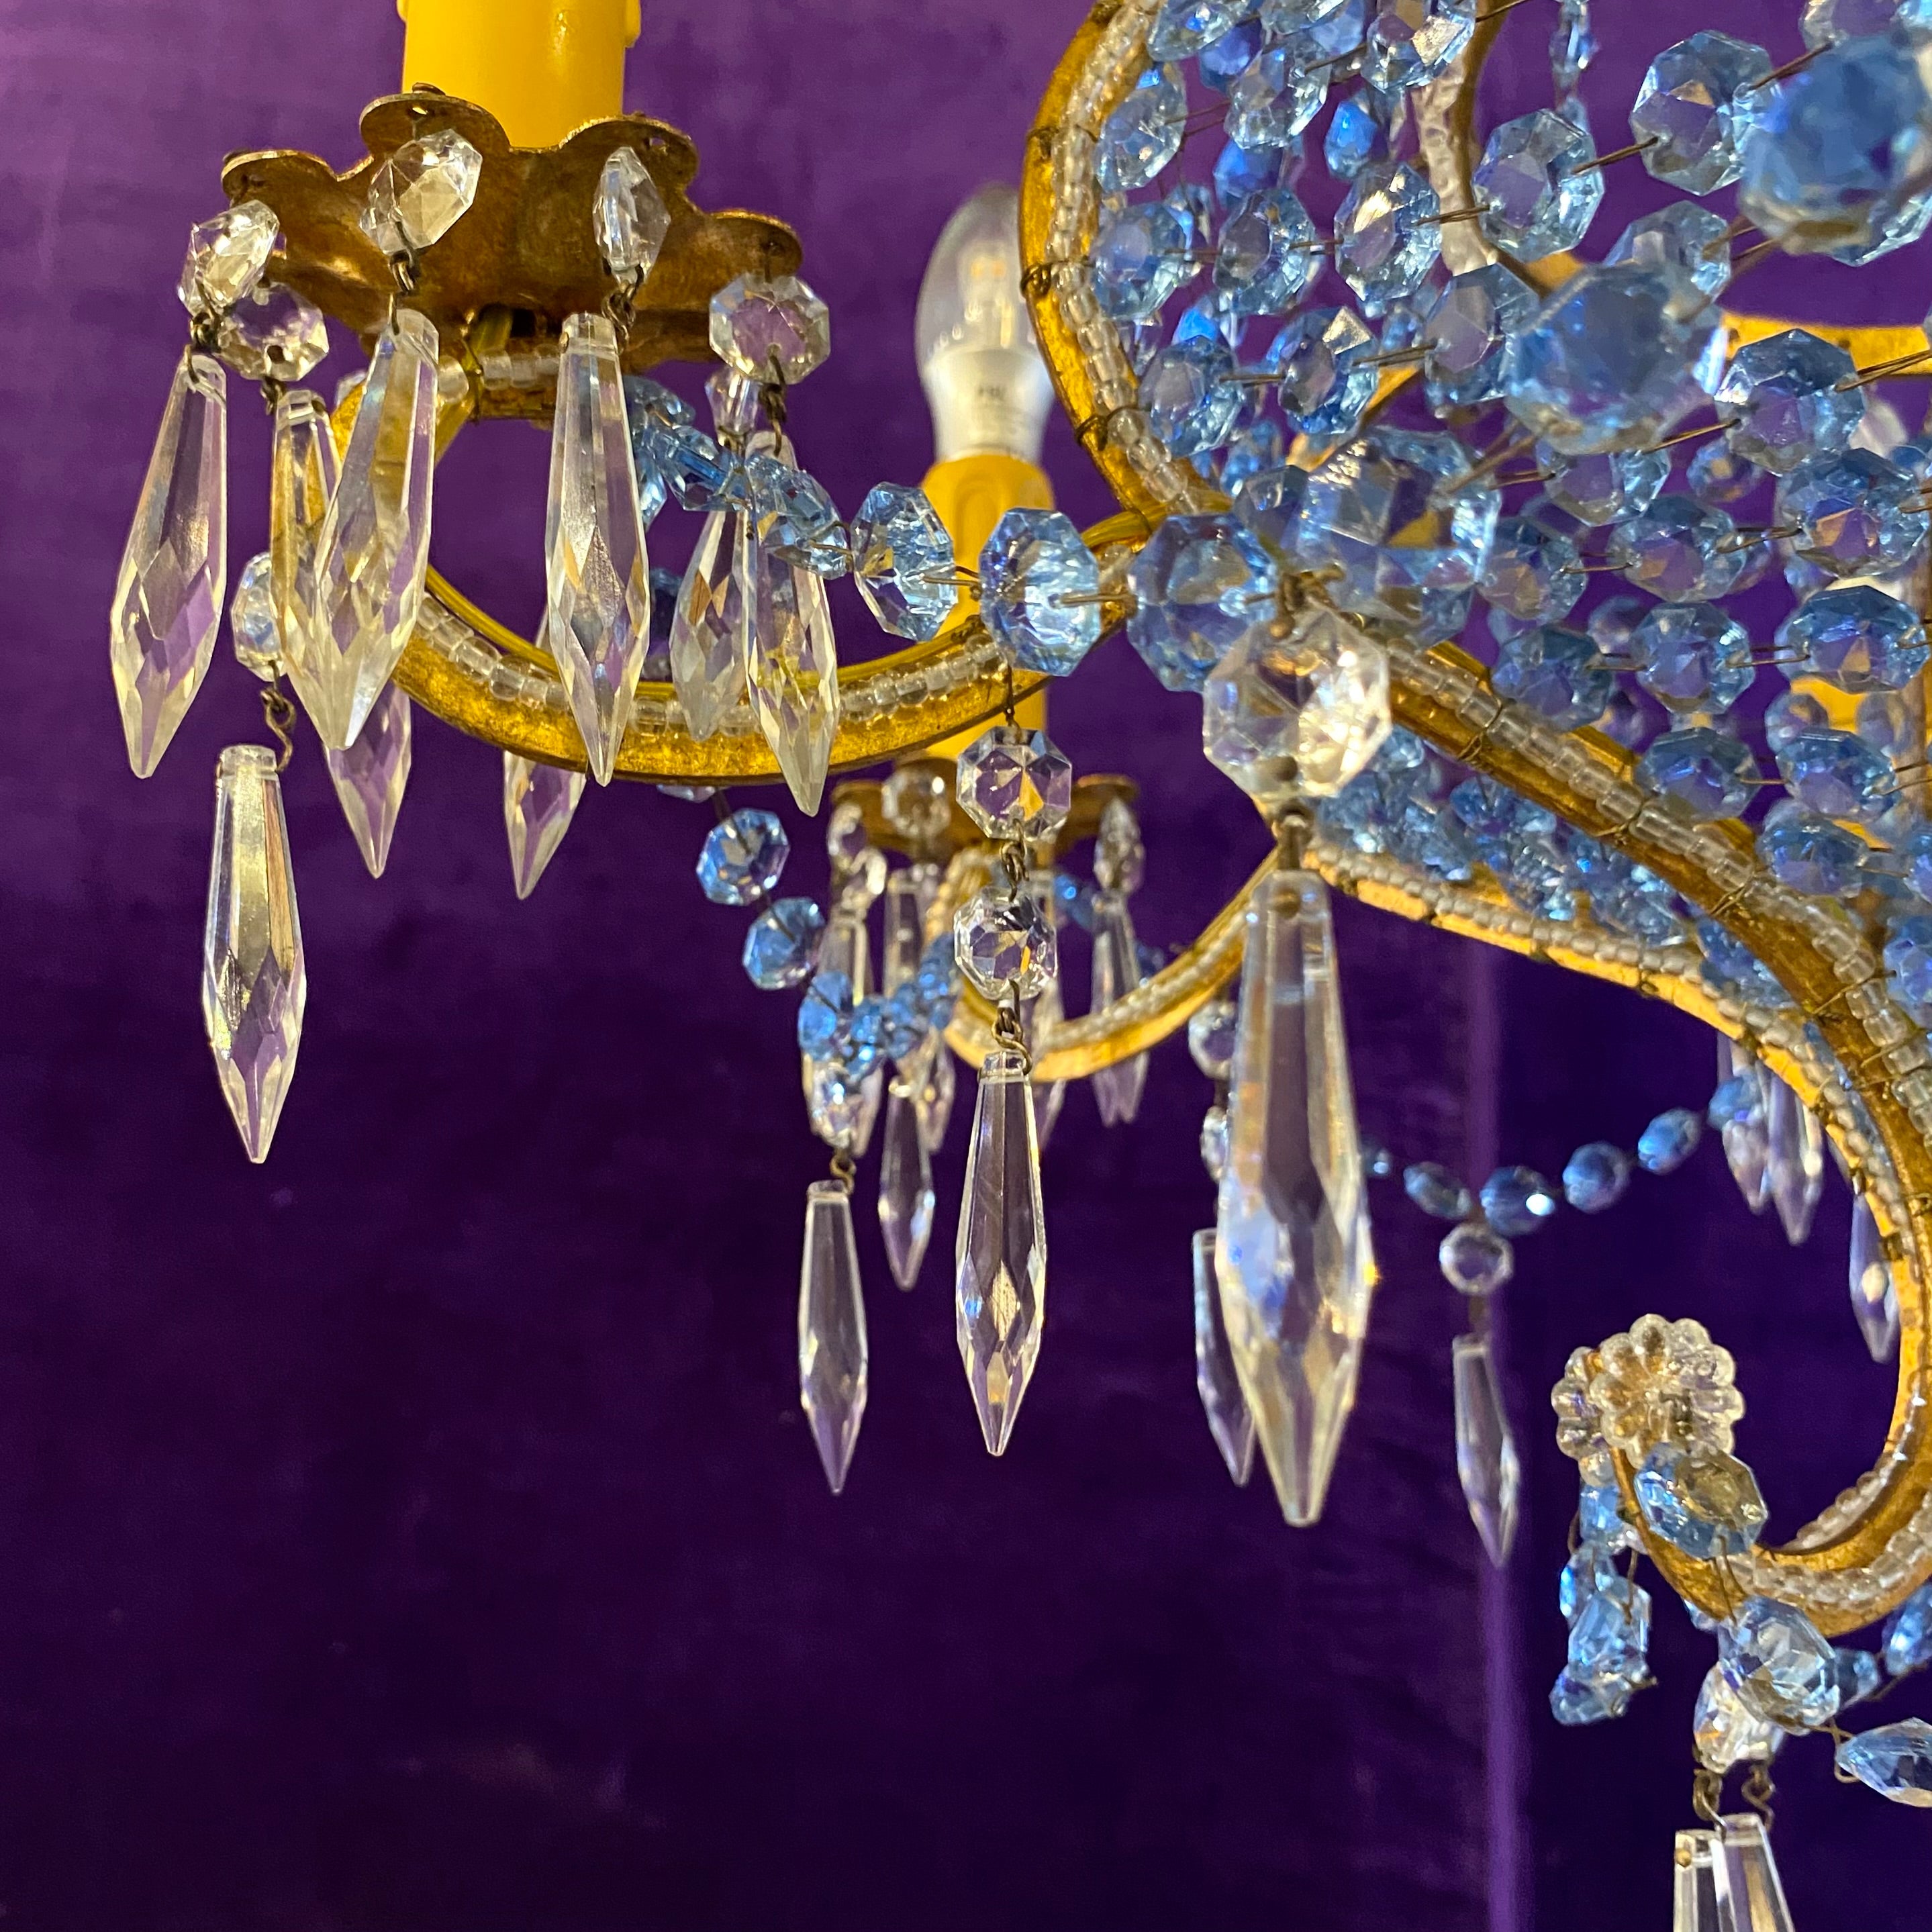 Antique Italian Beaded Chandelier with Original Blue Crystals